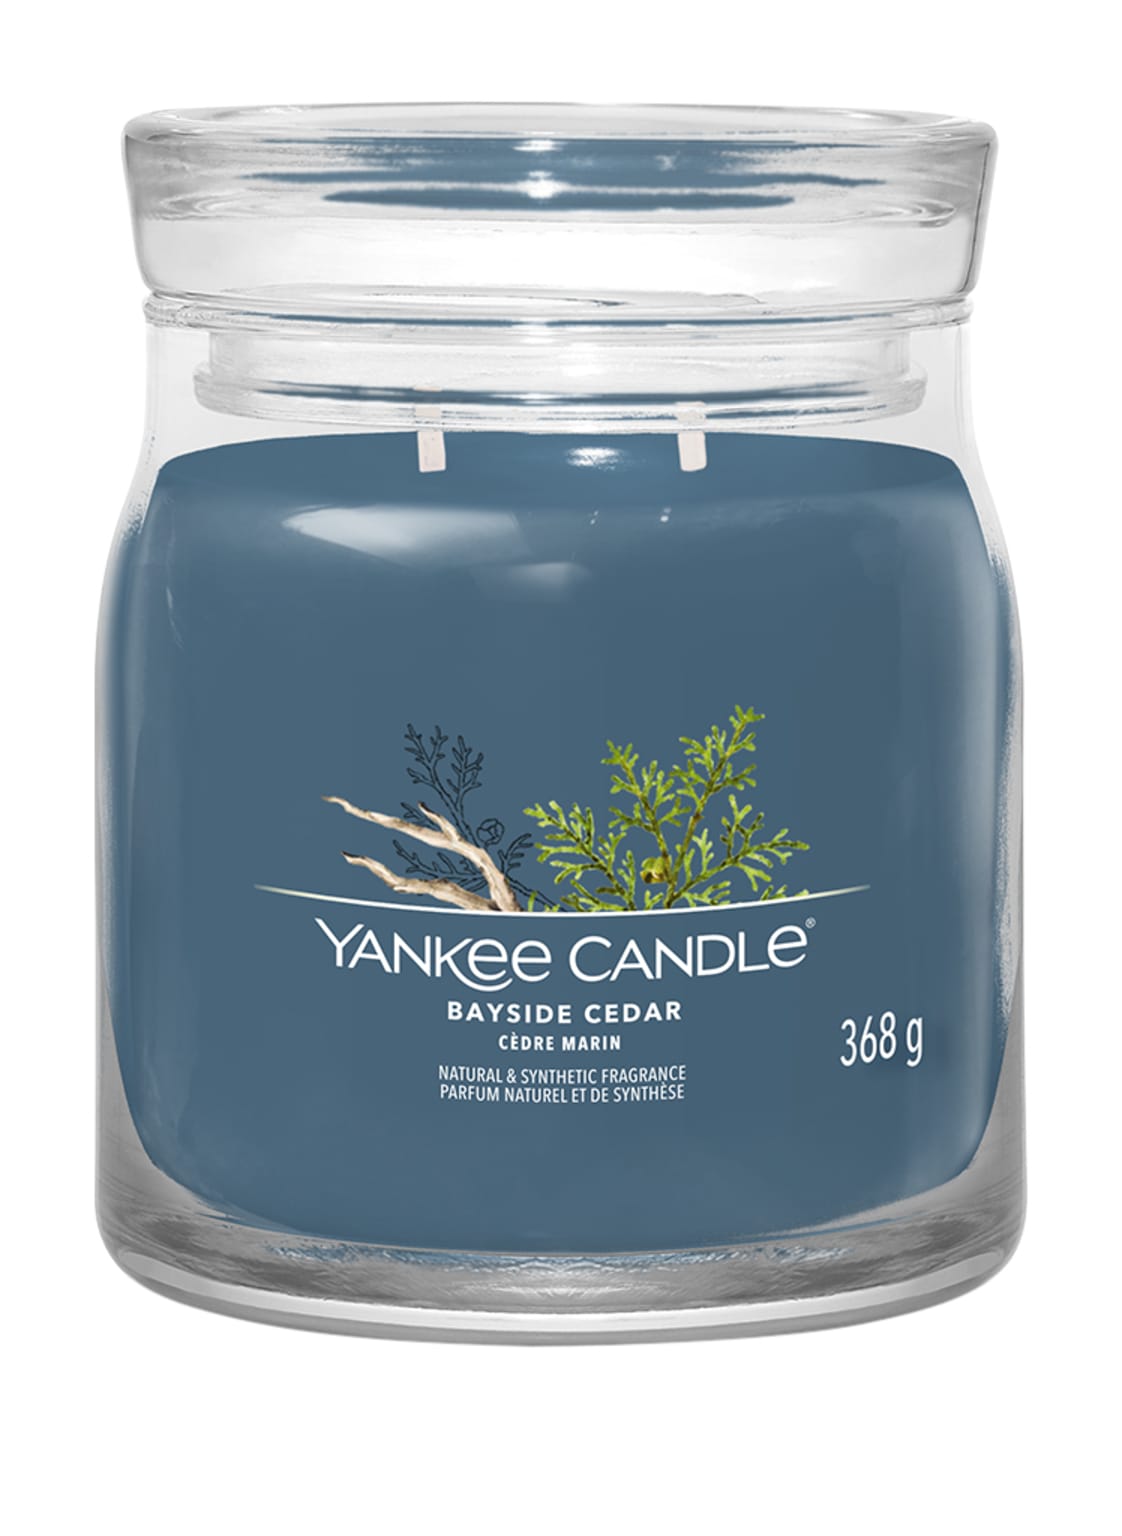 Yankee Candle Bayside Cedar Duftkerze 368 g von Yankee Candle